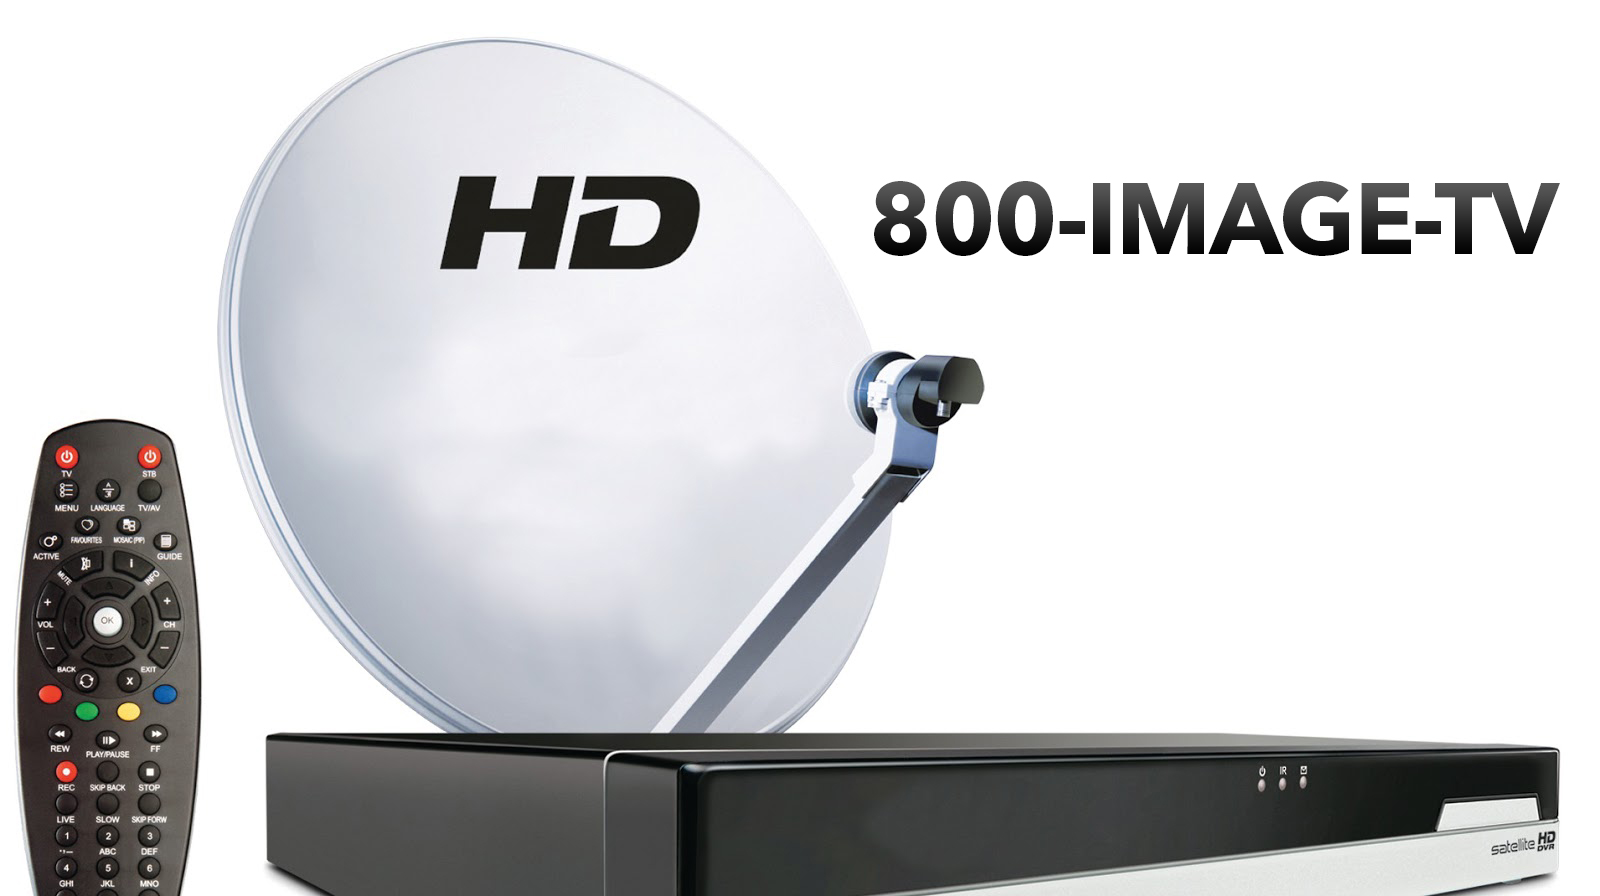 TV Satellite and remote control using 1-800-IMAGE-TV